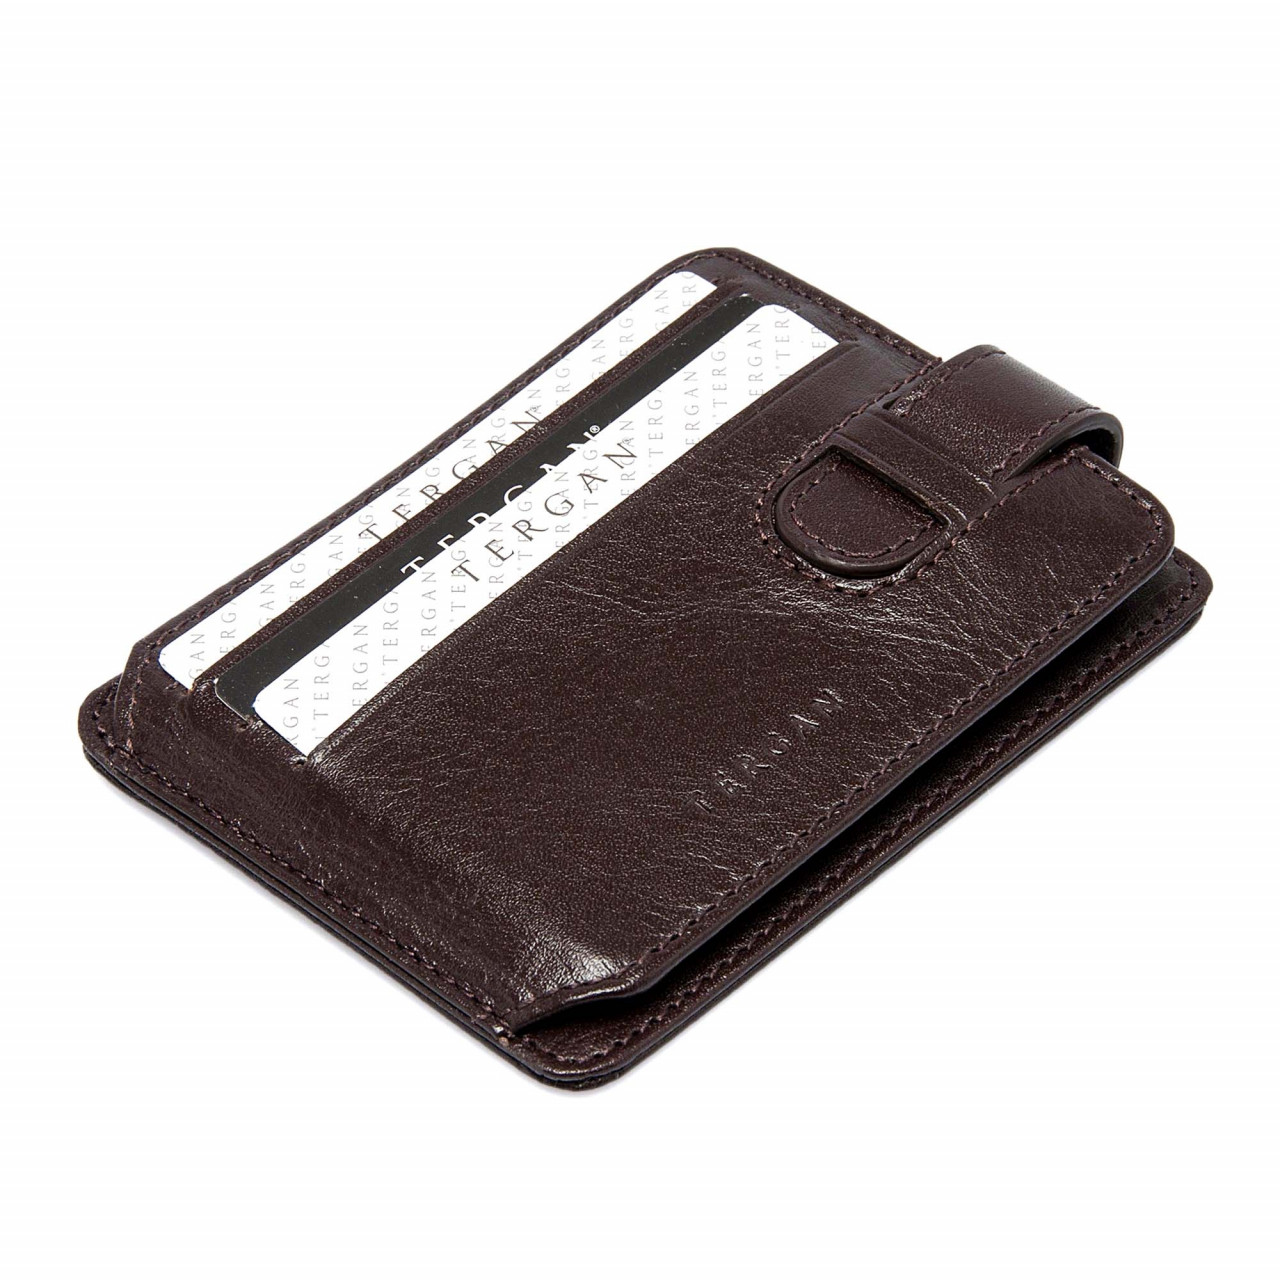 Slim wallet and card holder